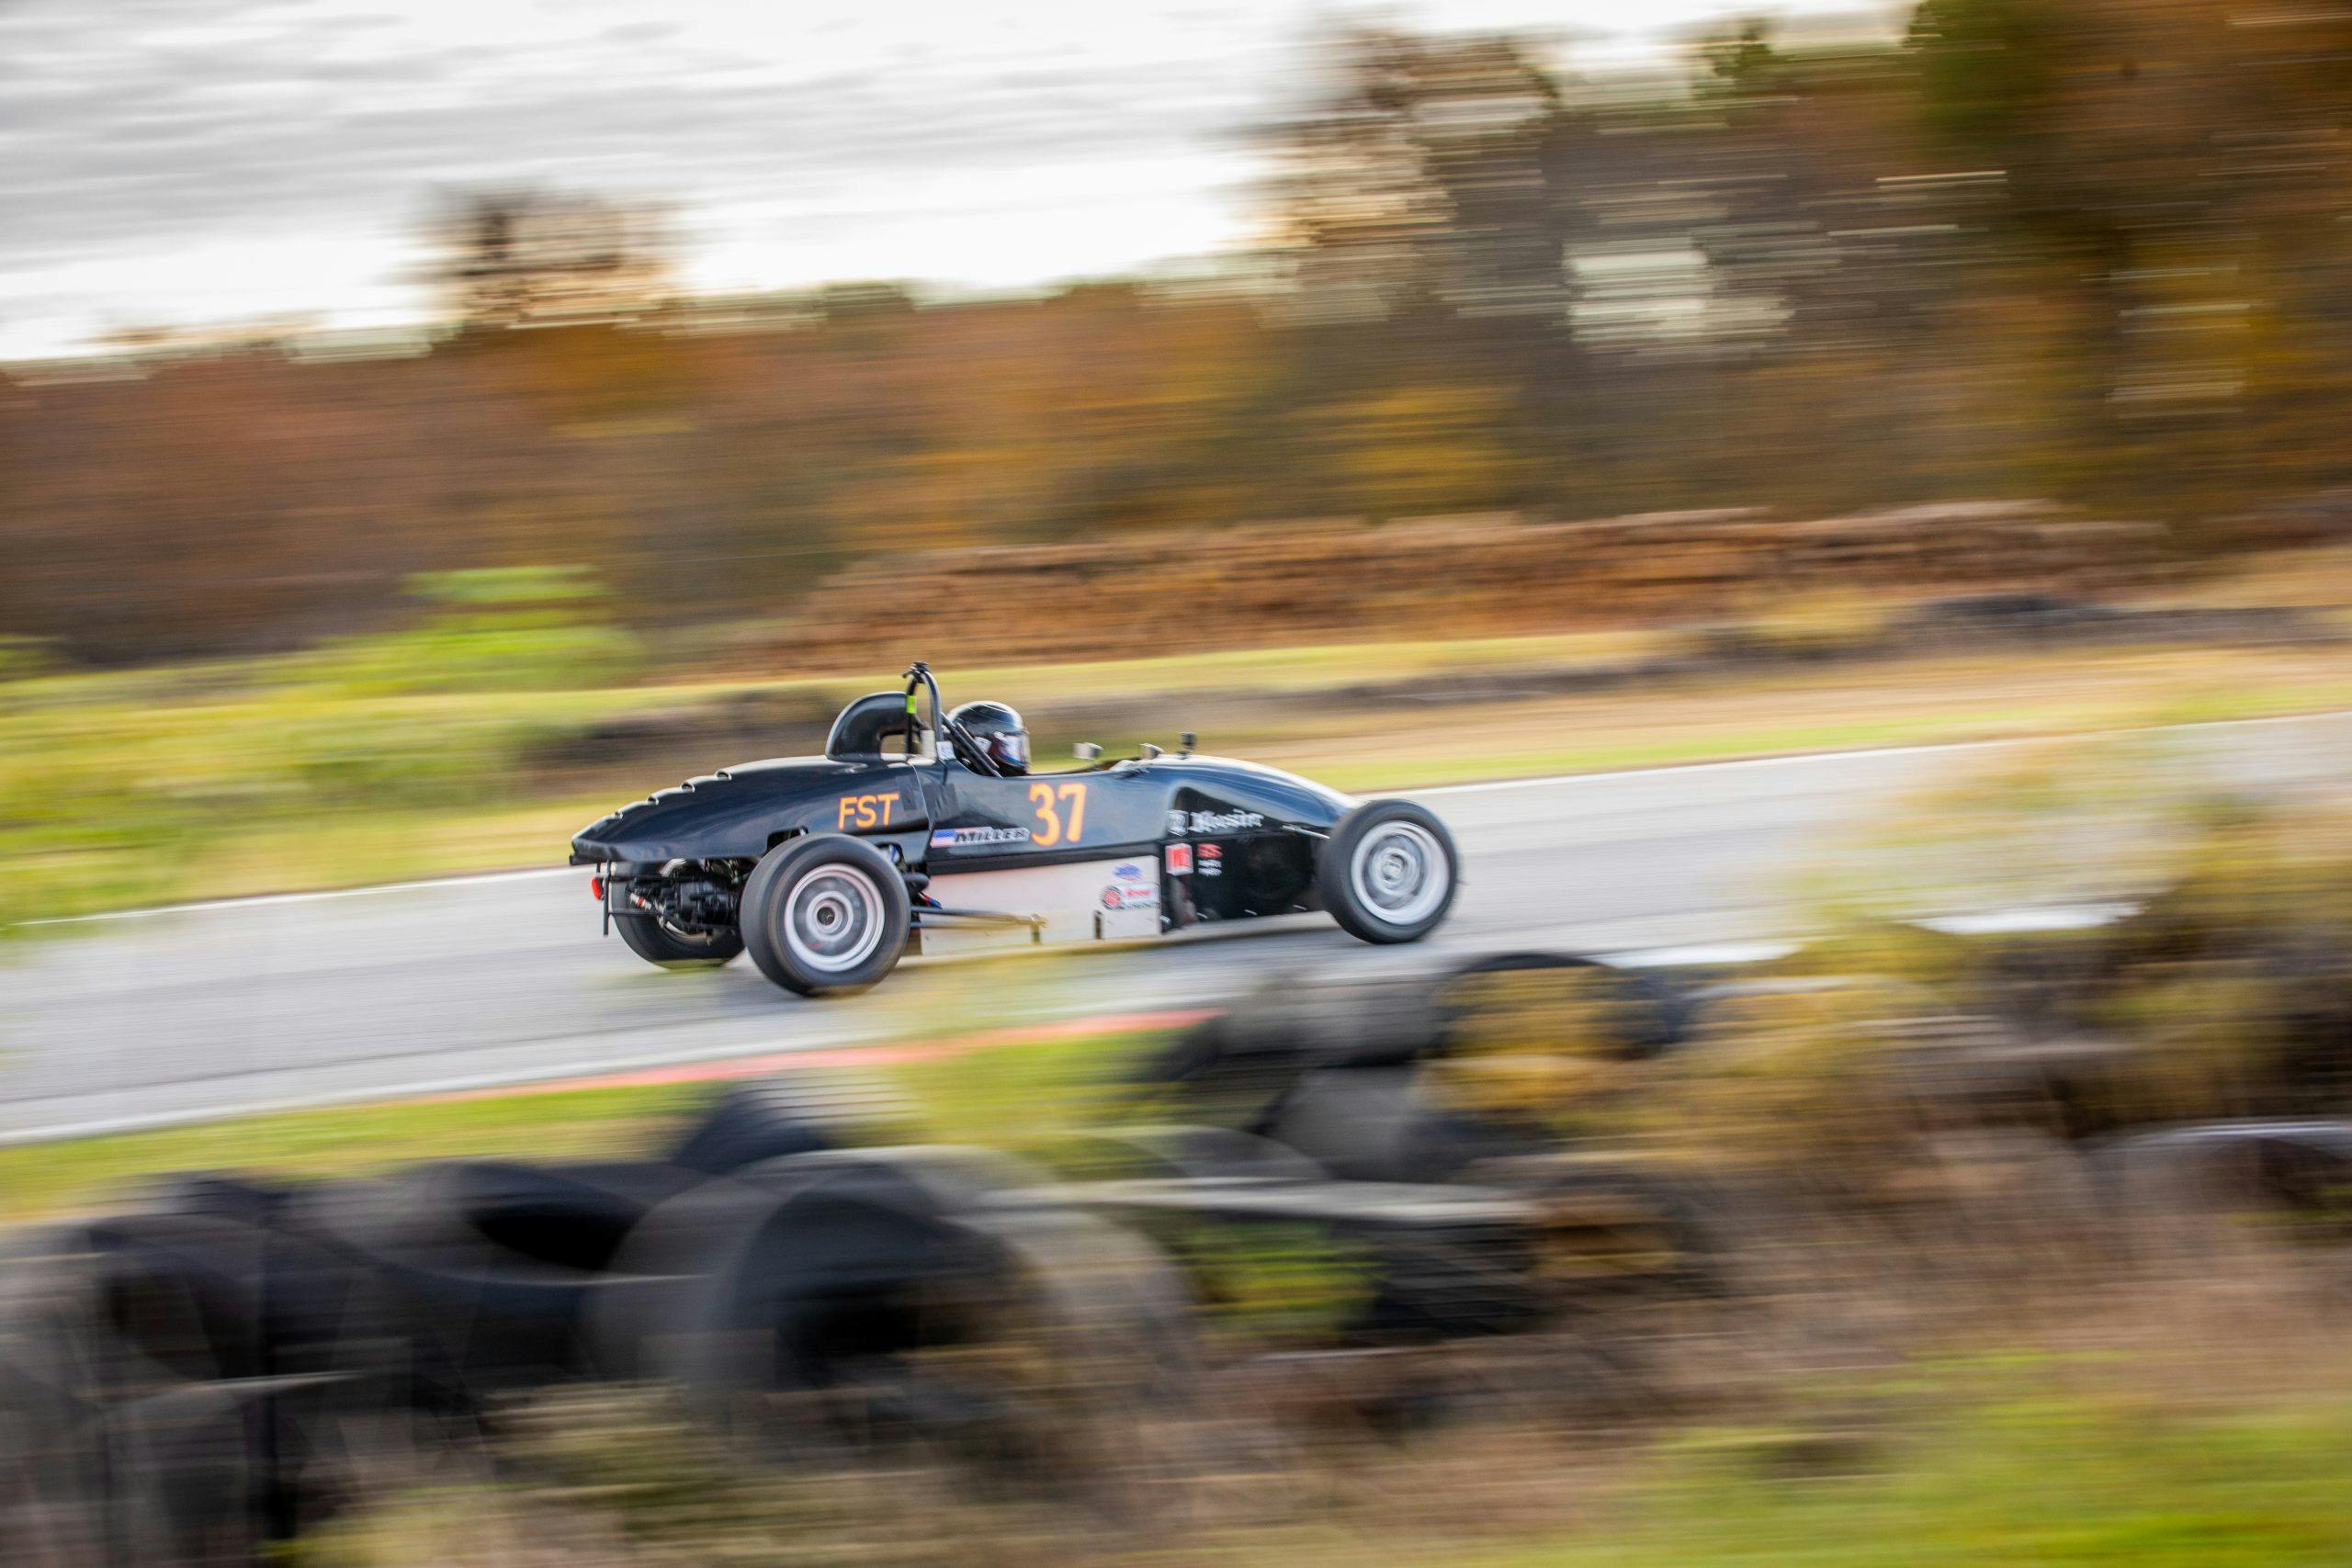 Formula First racecar dynamic action